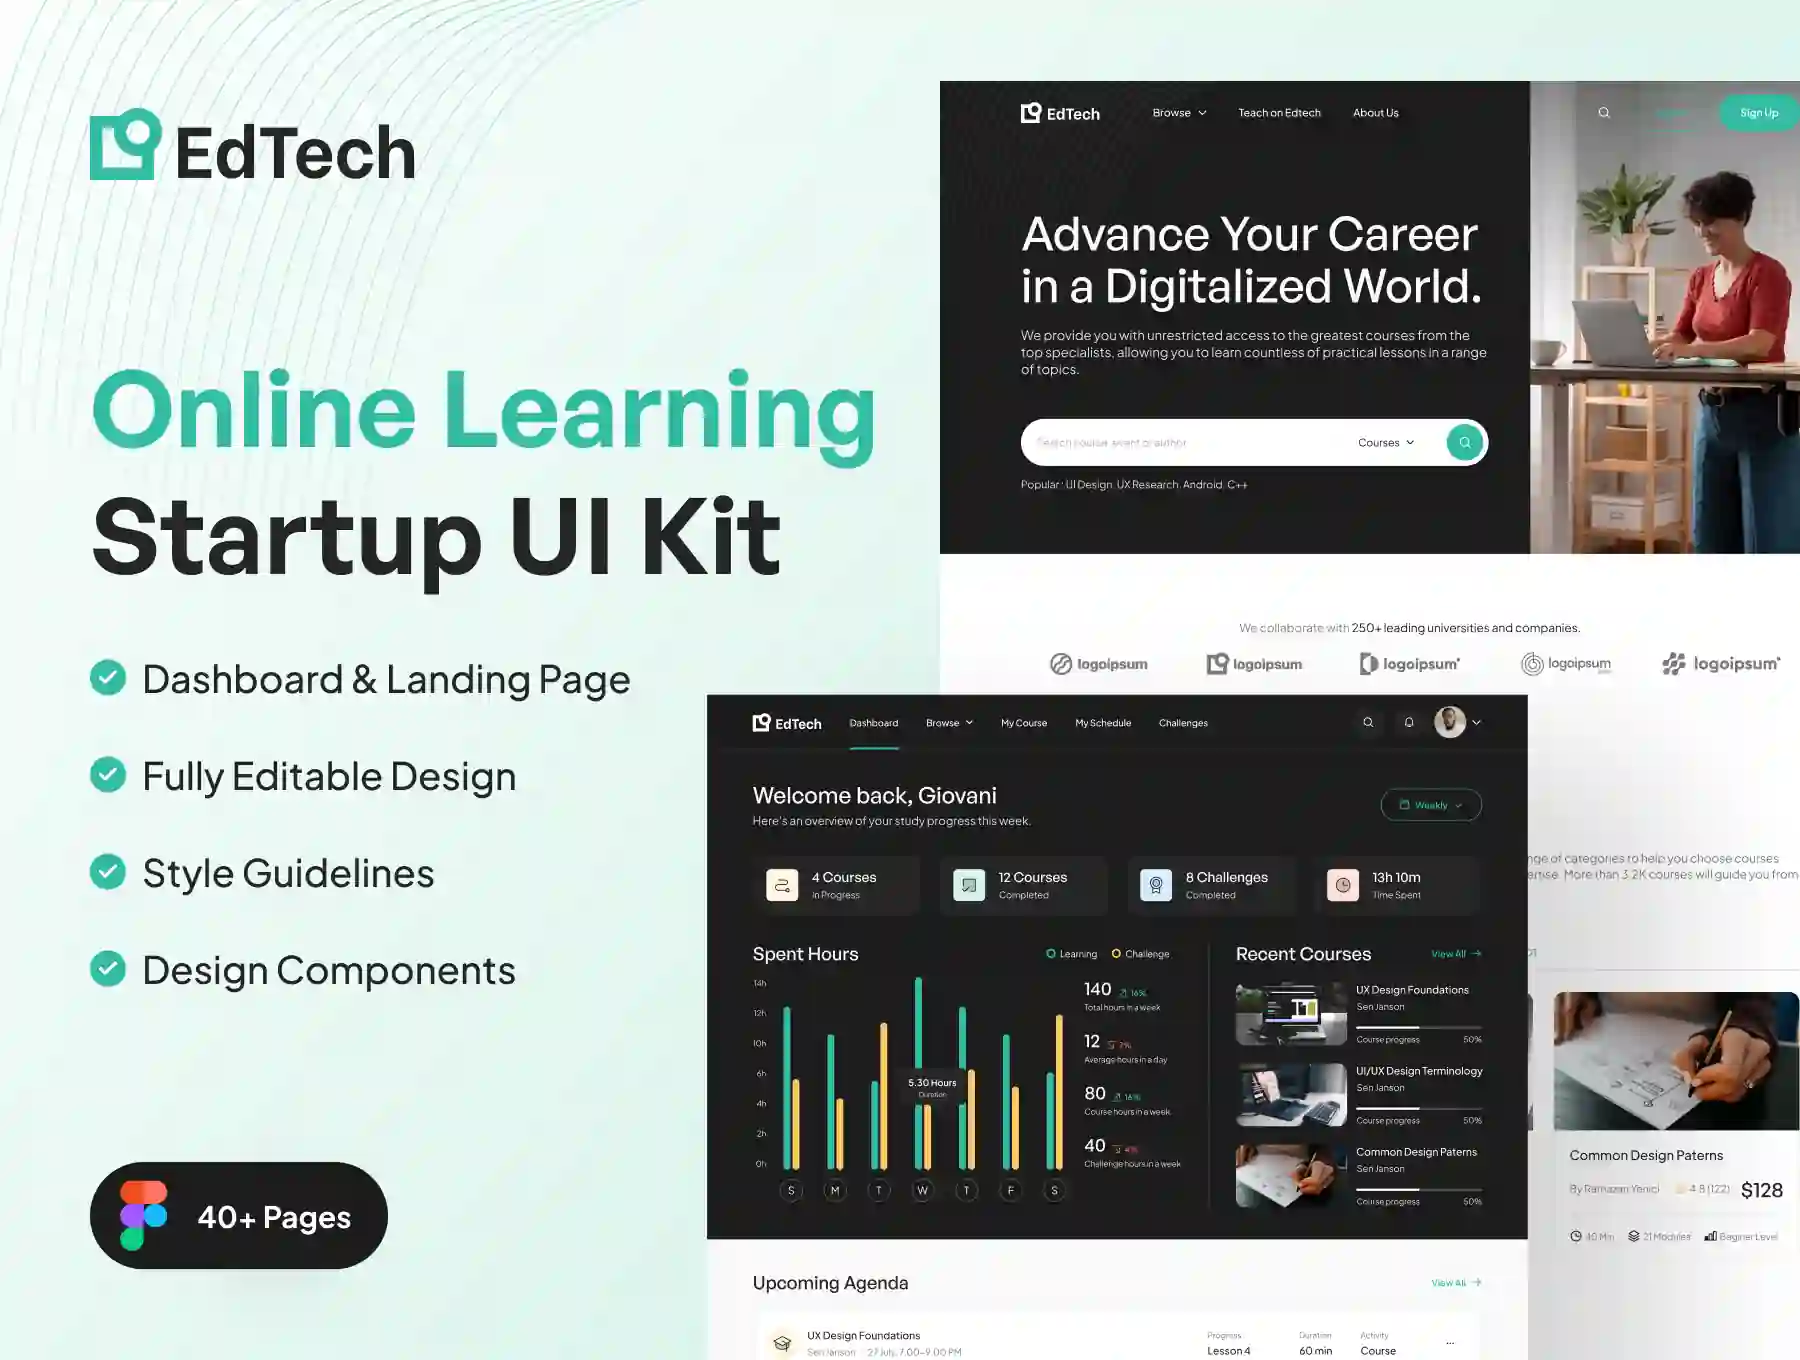 EdTech - Online Learning Startup Web UI Kit